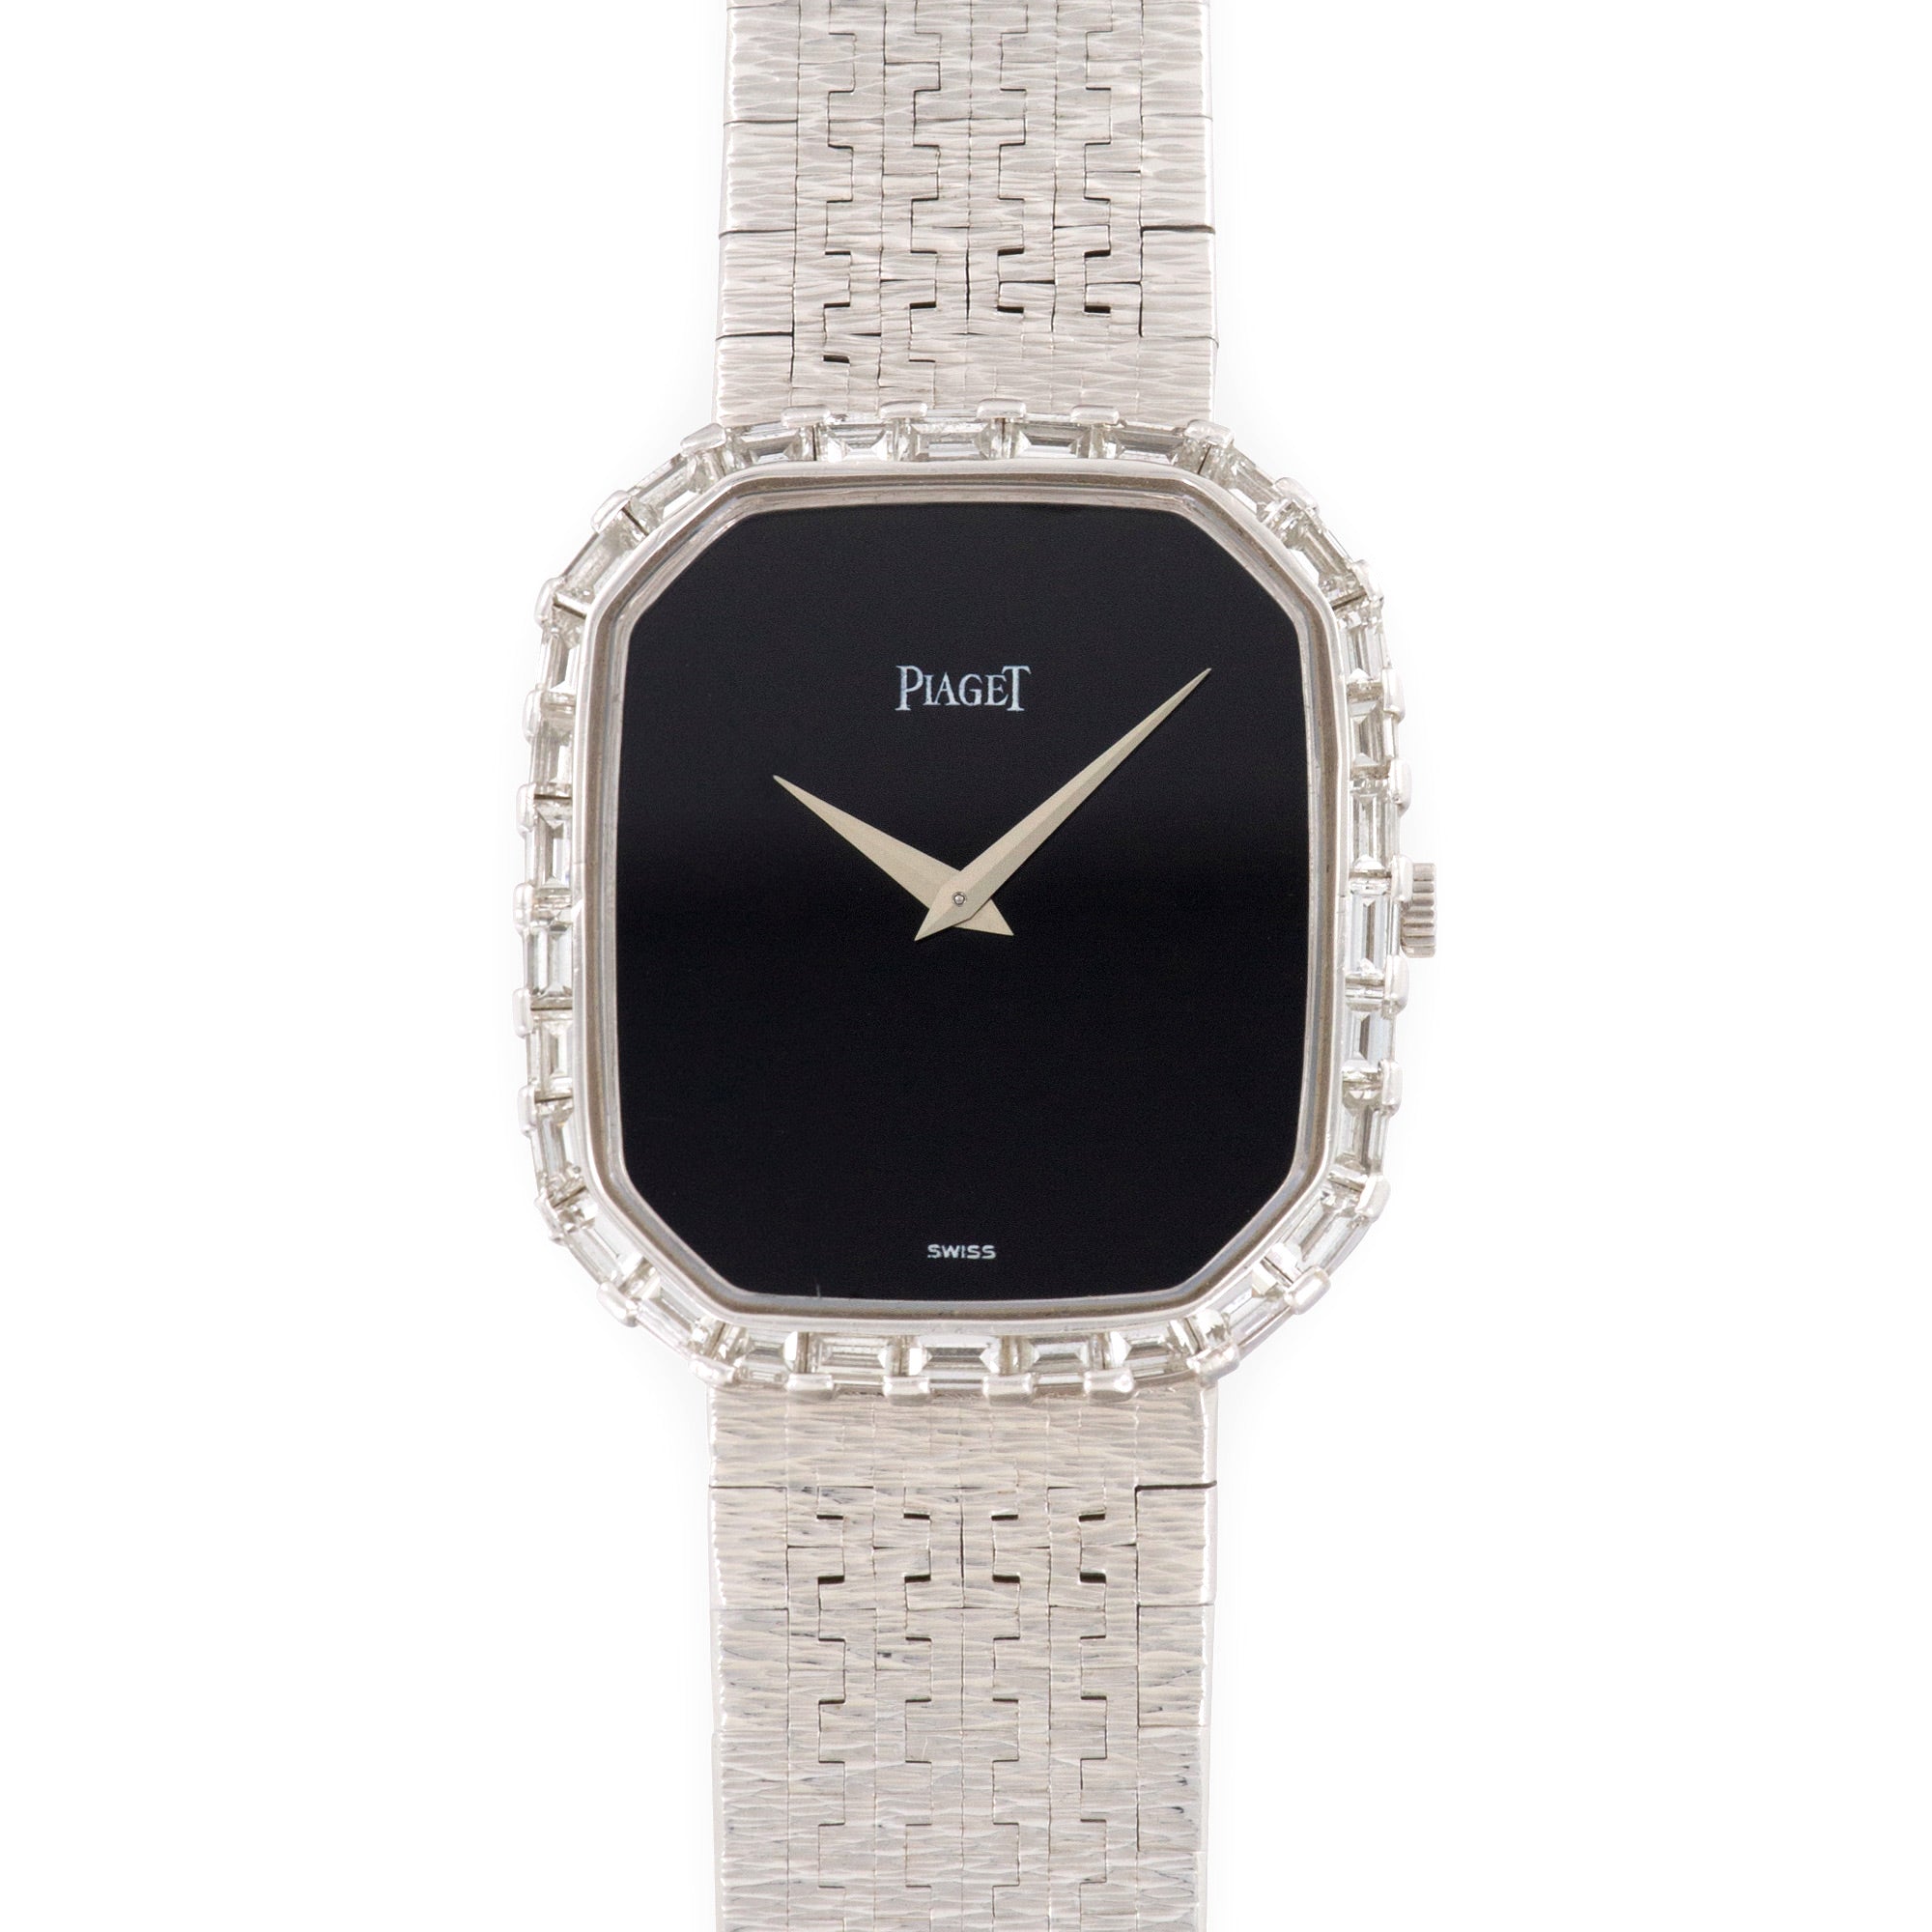 Piaget - Piaget White Gold Onyx & Baguette Diamond Watch - The Keystone Watches